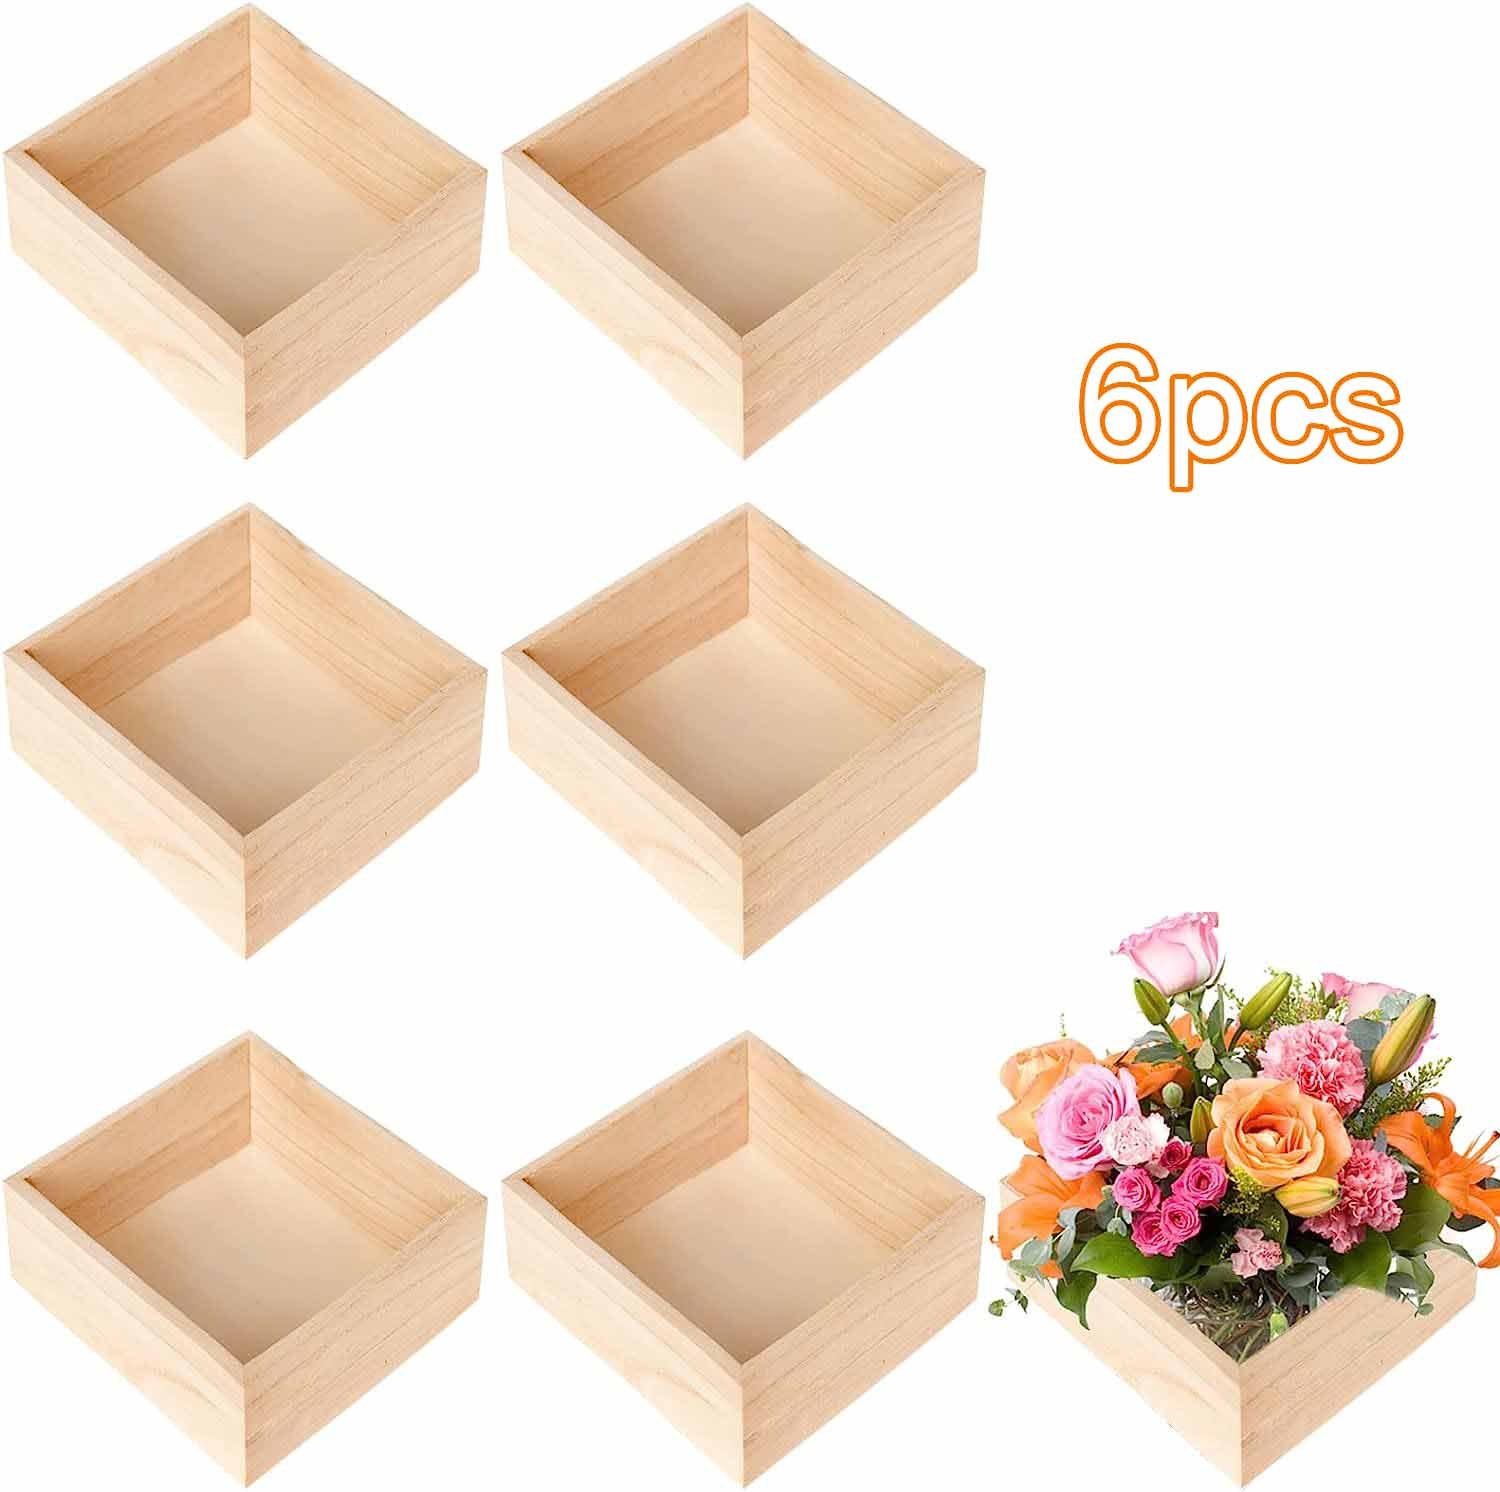 Paquete de 5 cajas de madera sin terminar para manualidades de madera